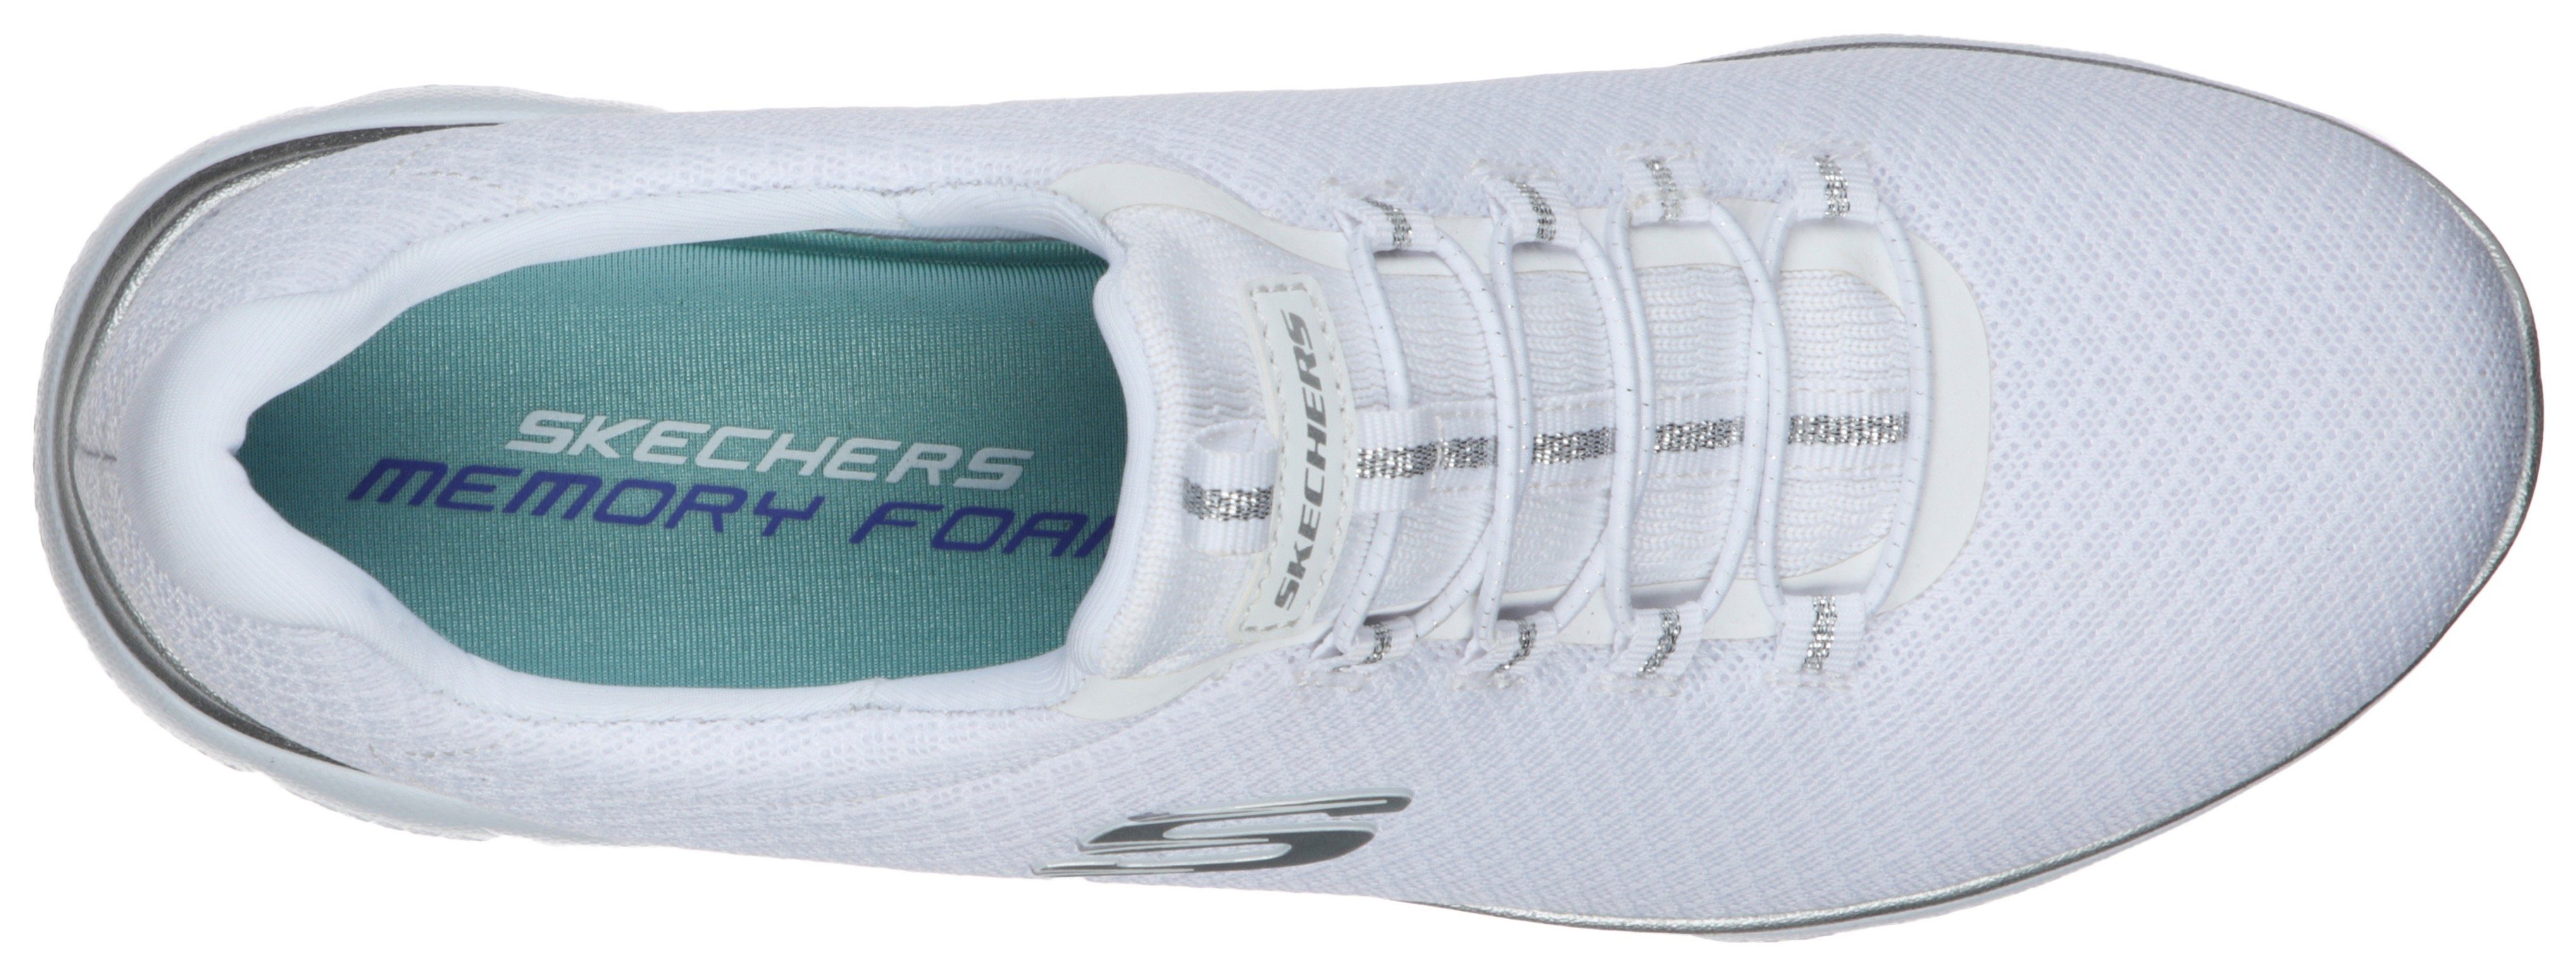 Skechers SUMMITS Slip-On mit Kontrast-Details Sneaker weiß-silberfarben dezenten